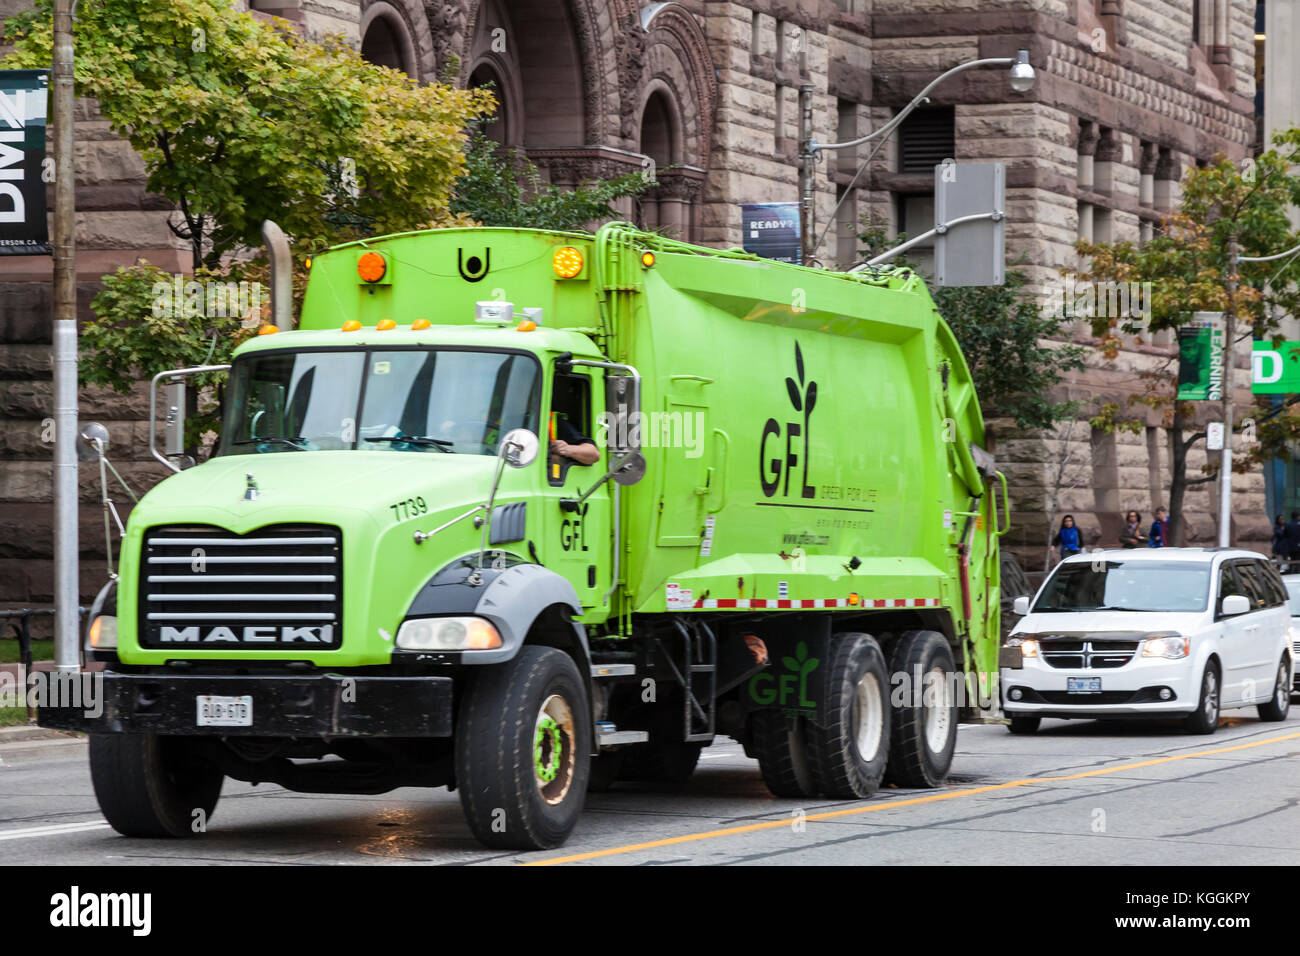 Toronto, Canada - oct 11, 2017 : green gfl environmental service camion dans la ville de Toronto, Canada Banque D'Images